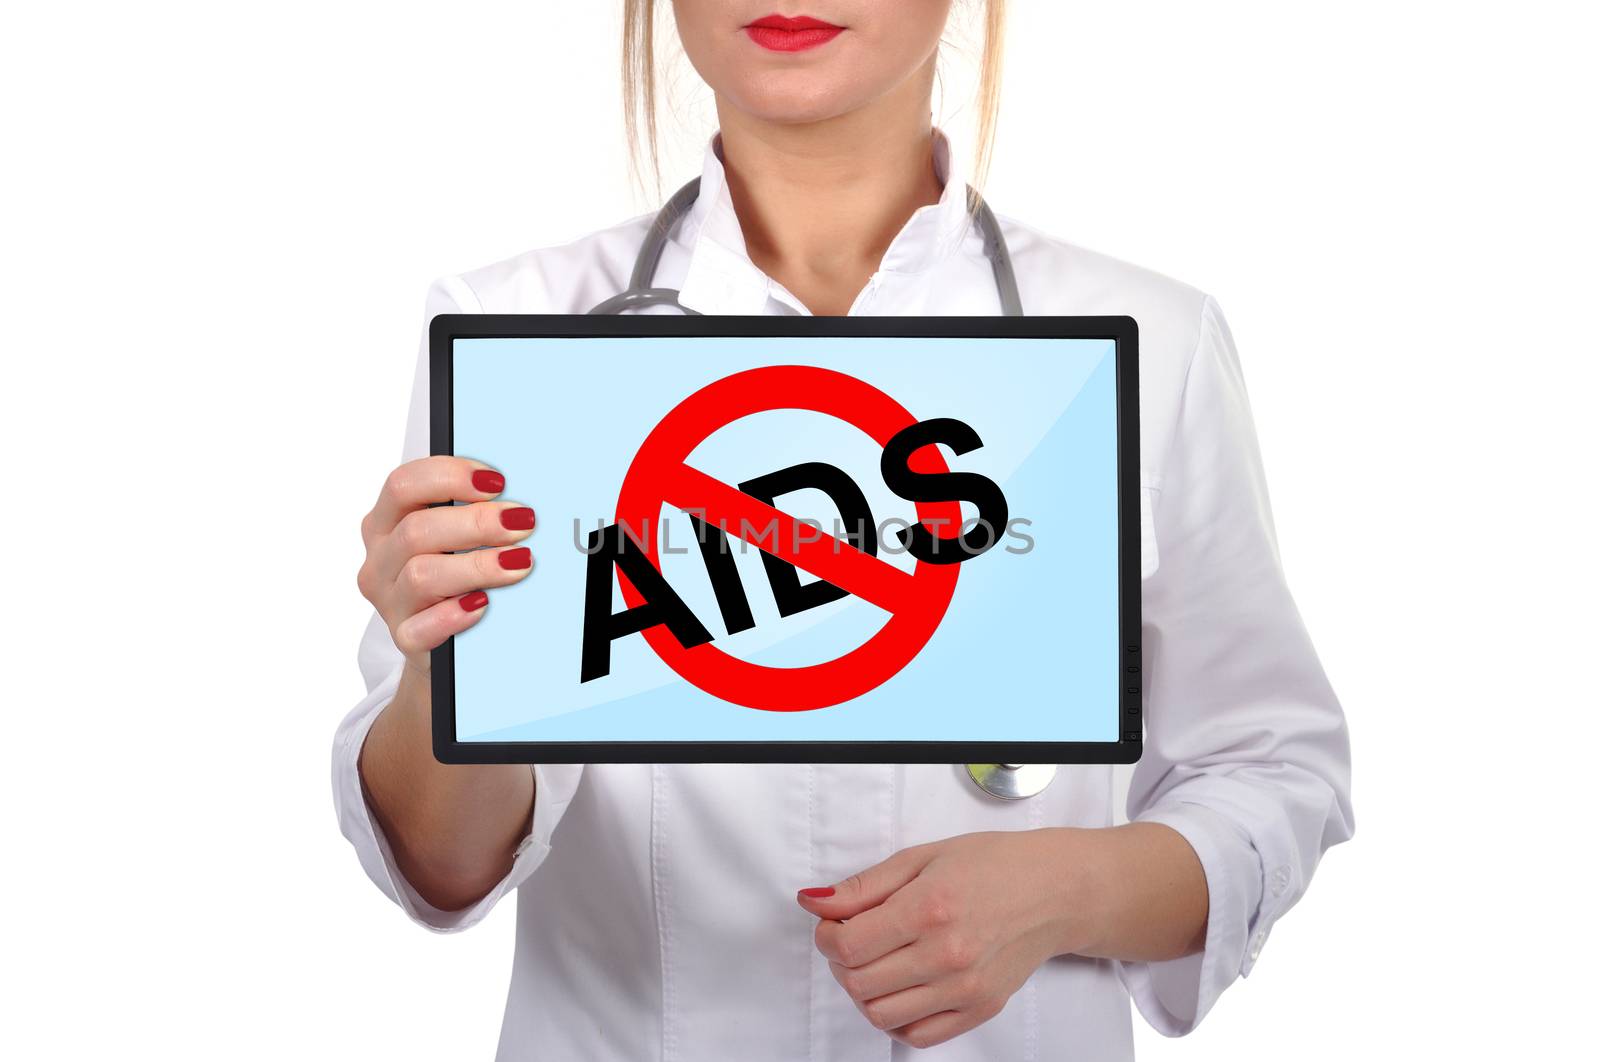 no aids by vetkit